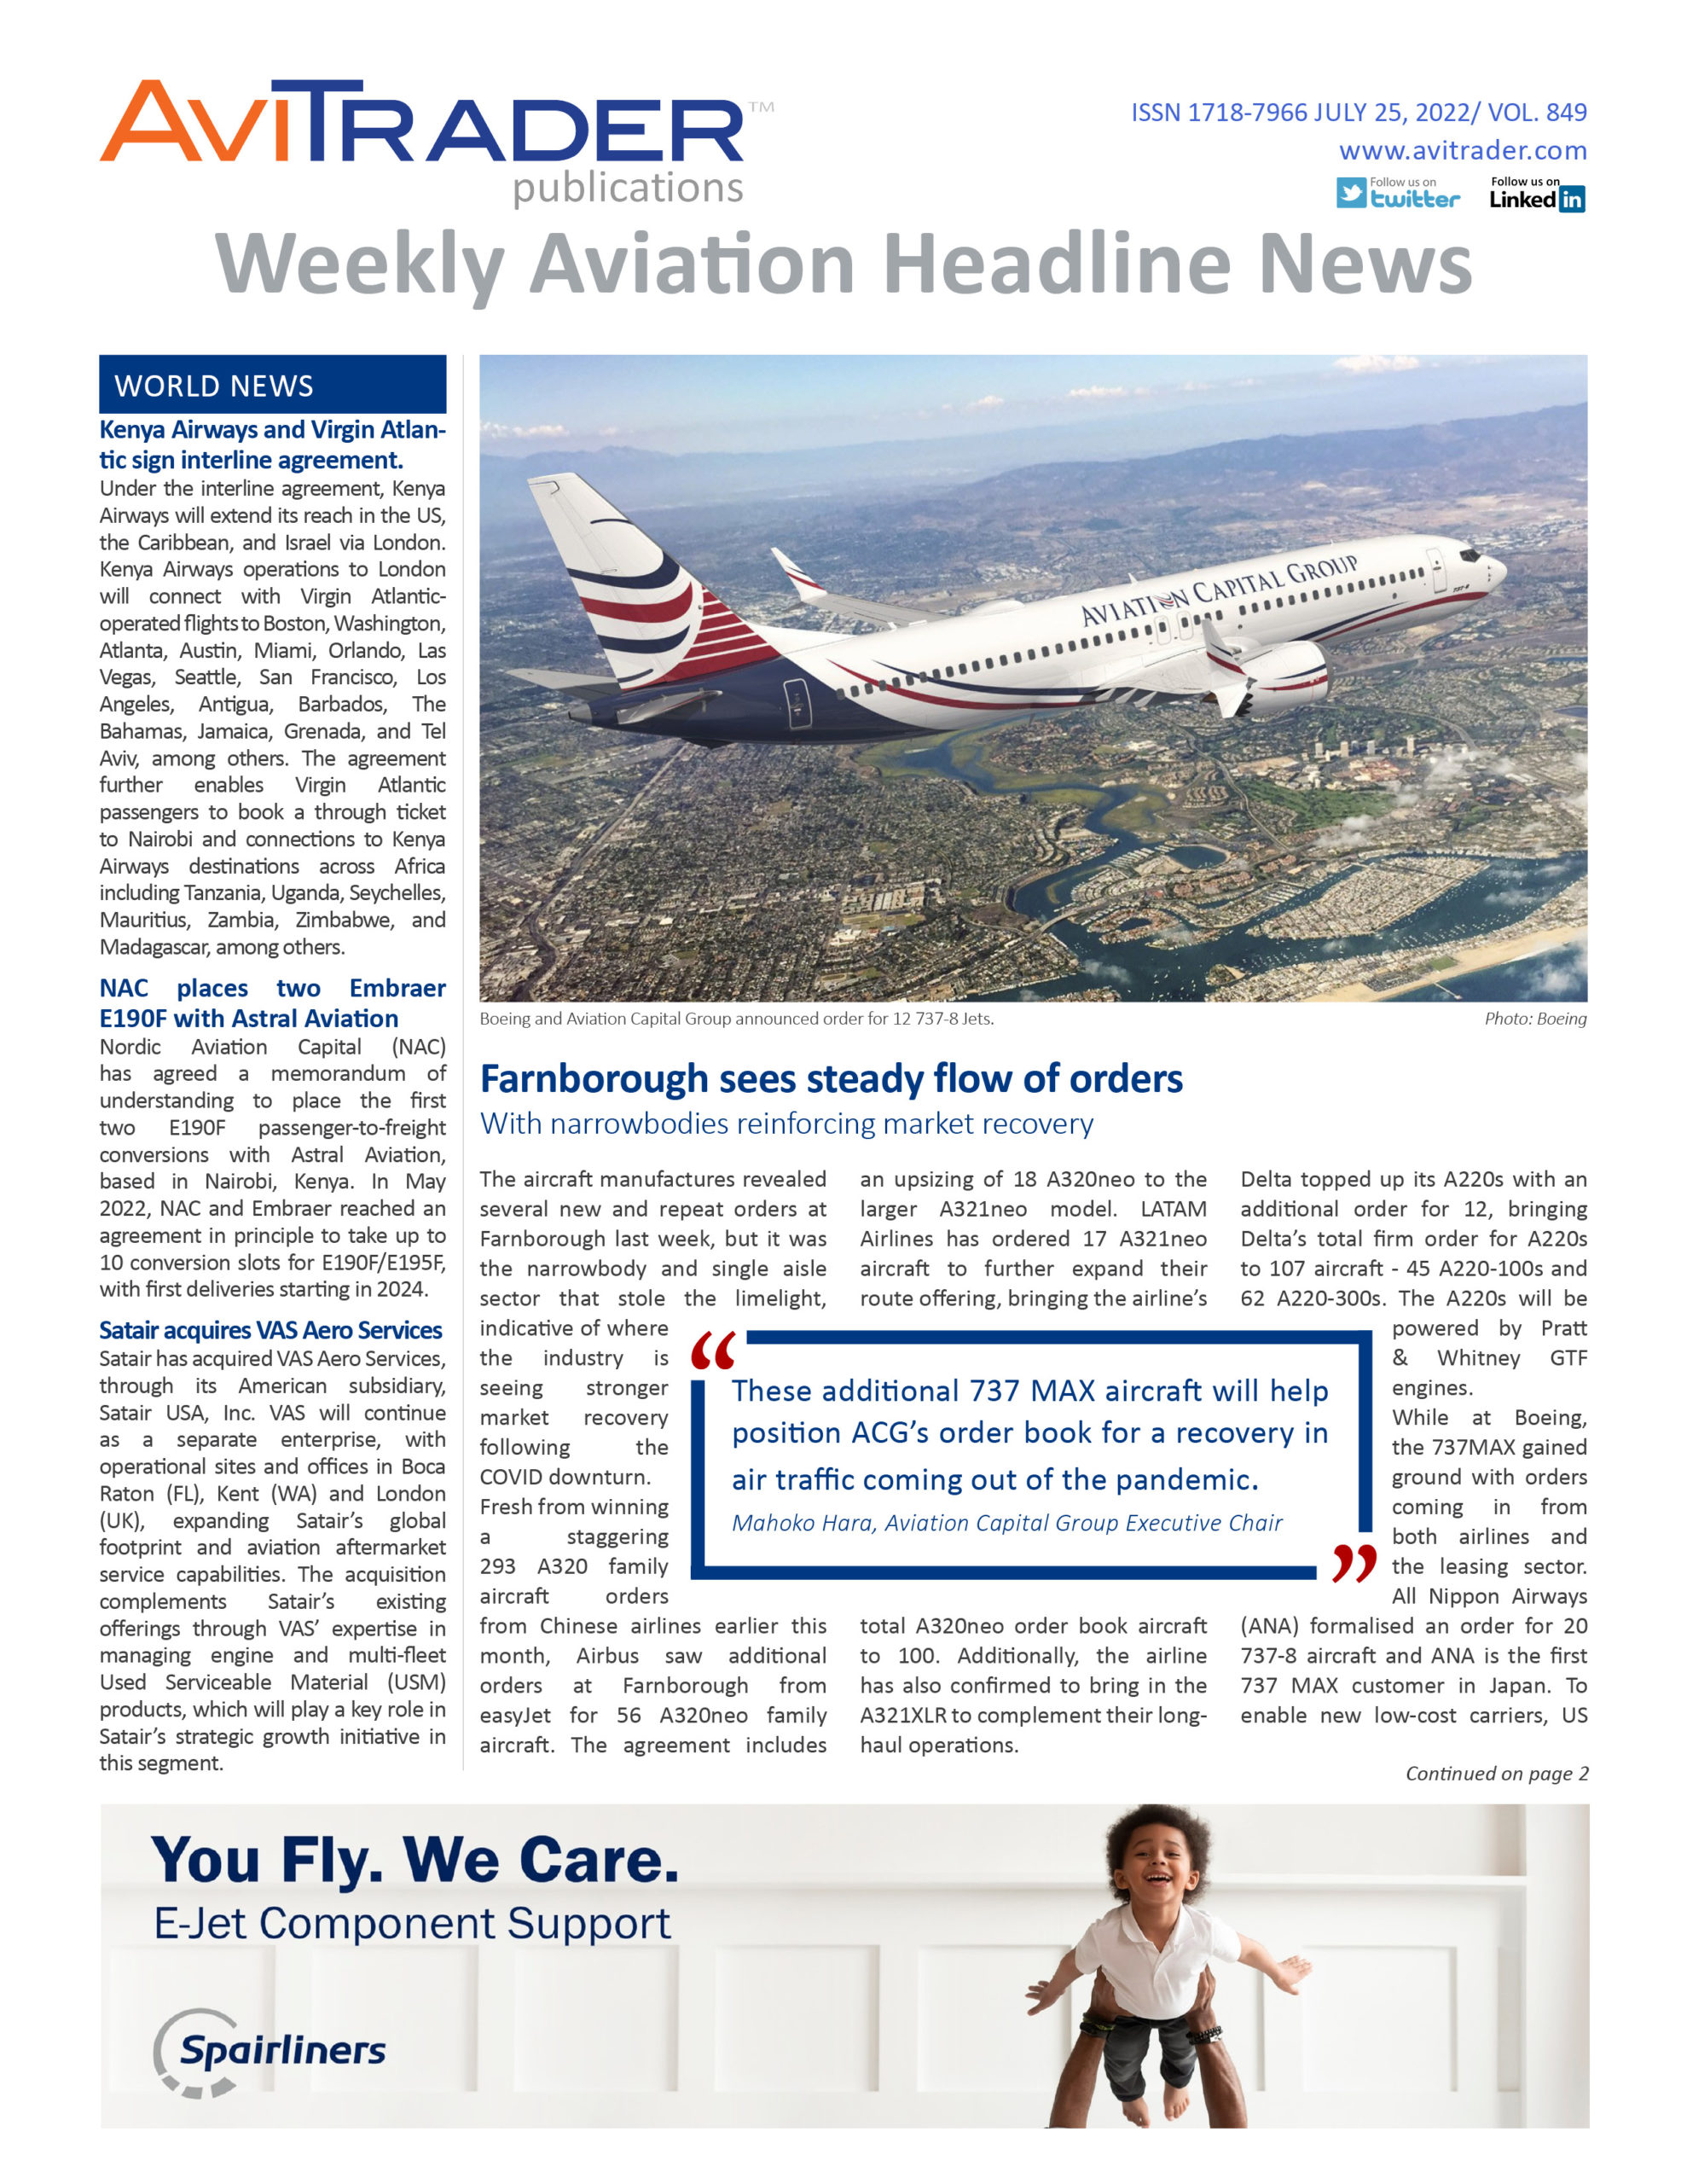 AviTrader_Weekly_Headline_News_Cover_2022-07-25